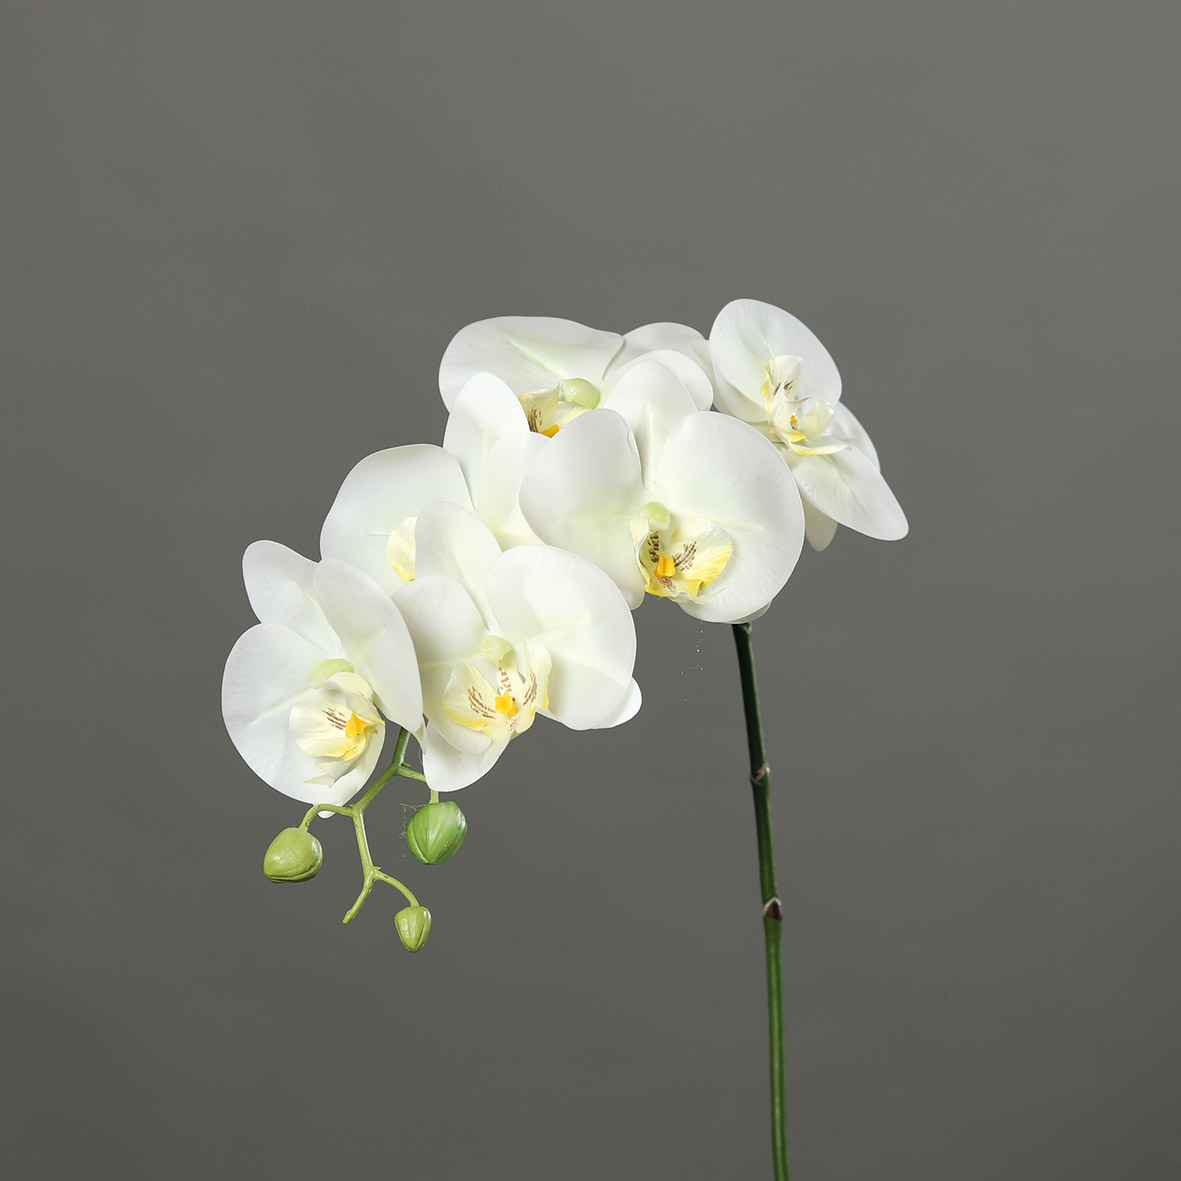 DPI GMBH - BRÜHL Orchidee white-green 78cm 